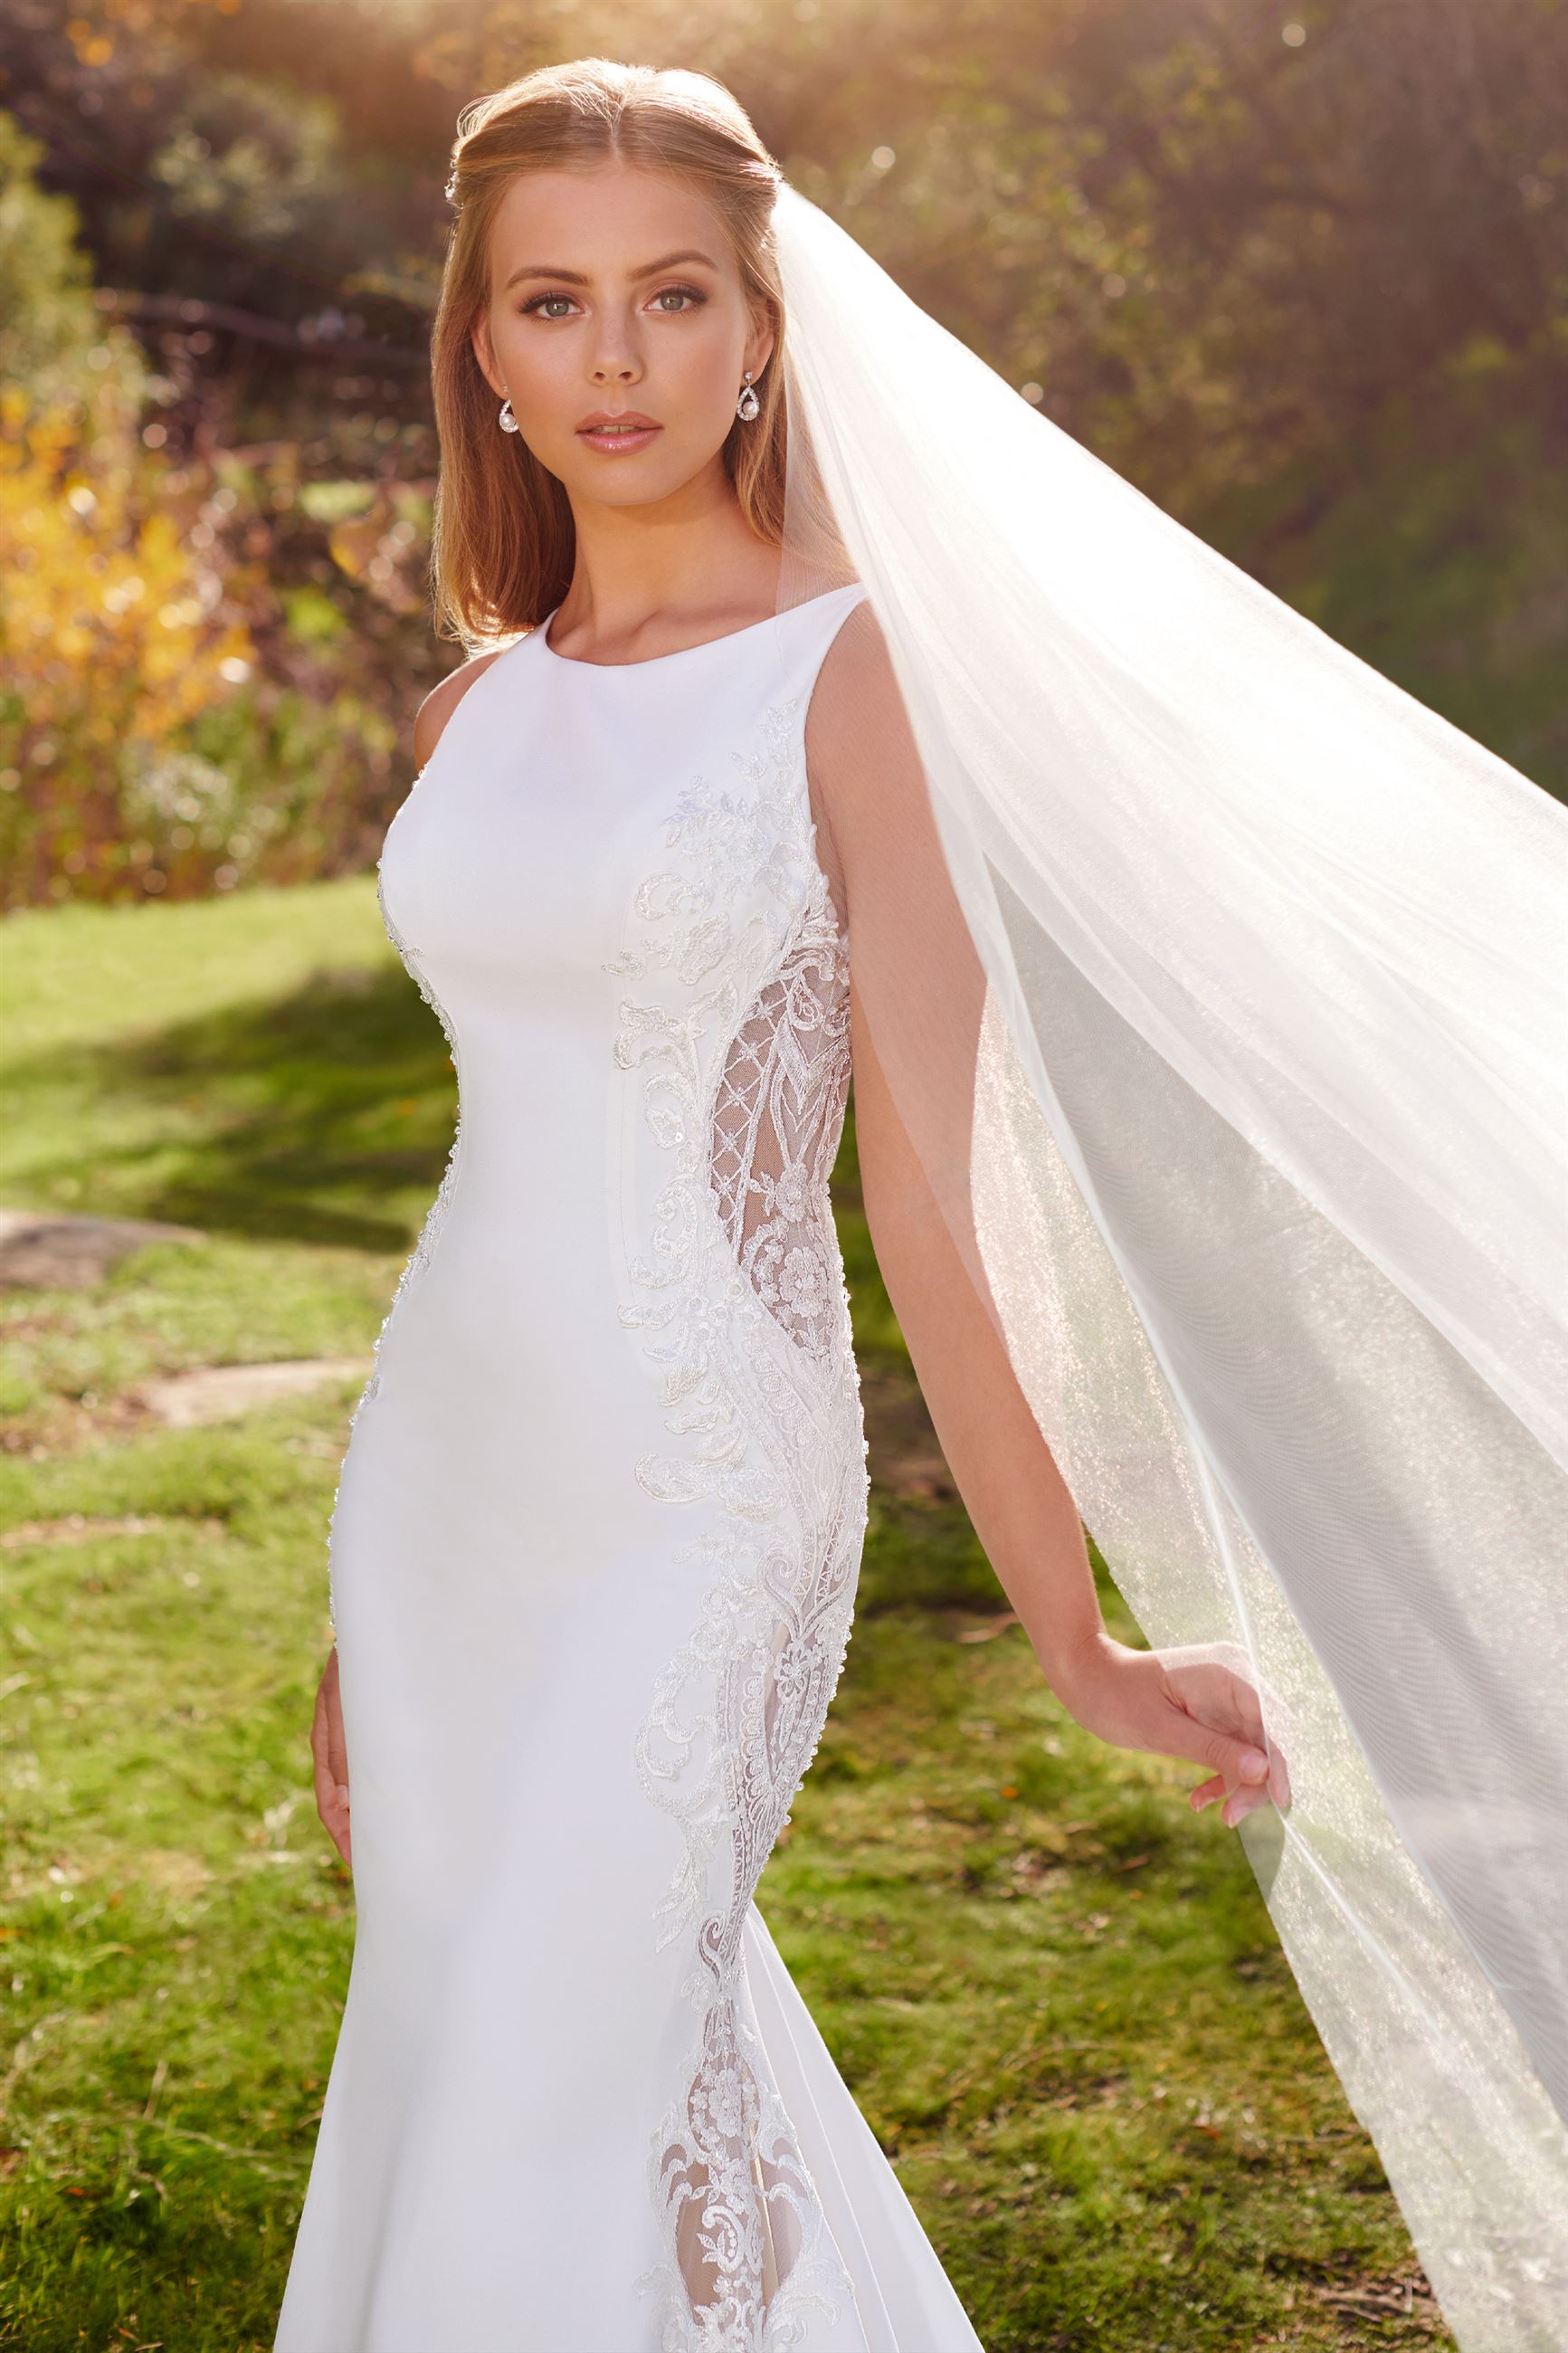 Blonde bride wearing veil and high neck wedding dress